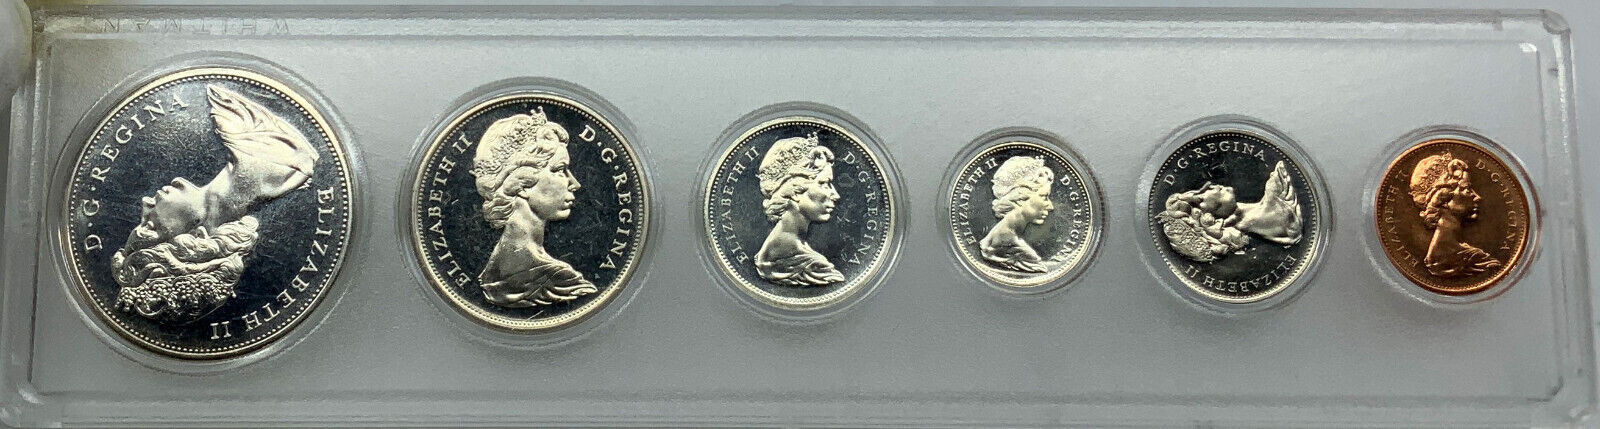 1965 CANADA Queen Elizabeth II MINT SET of 6 Coins 4 are Silver Dollar i116012